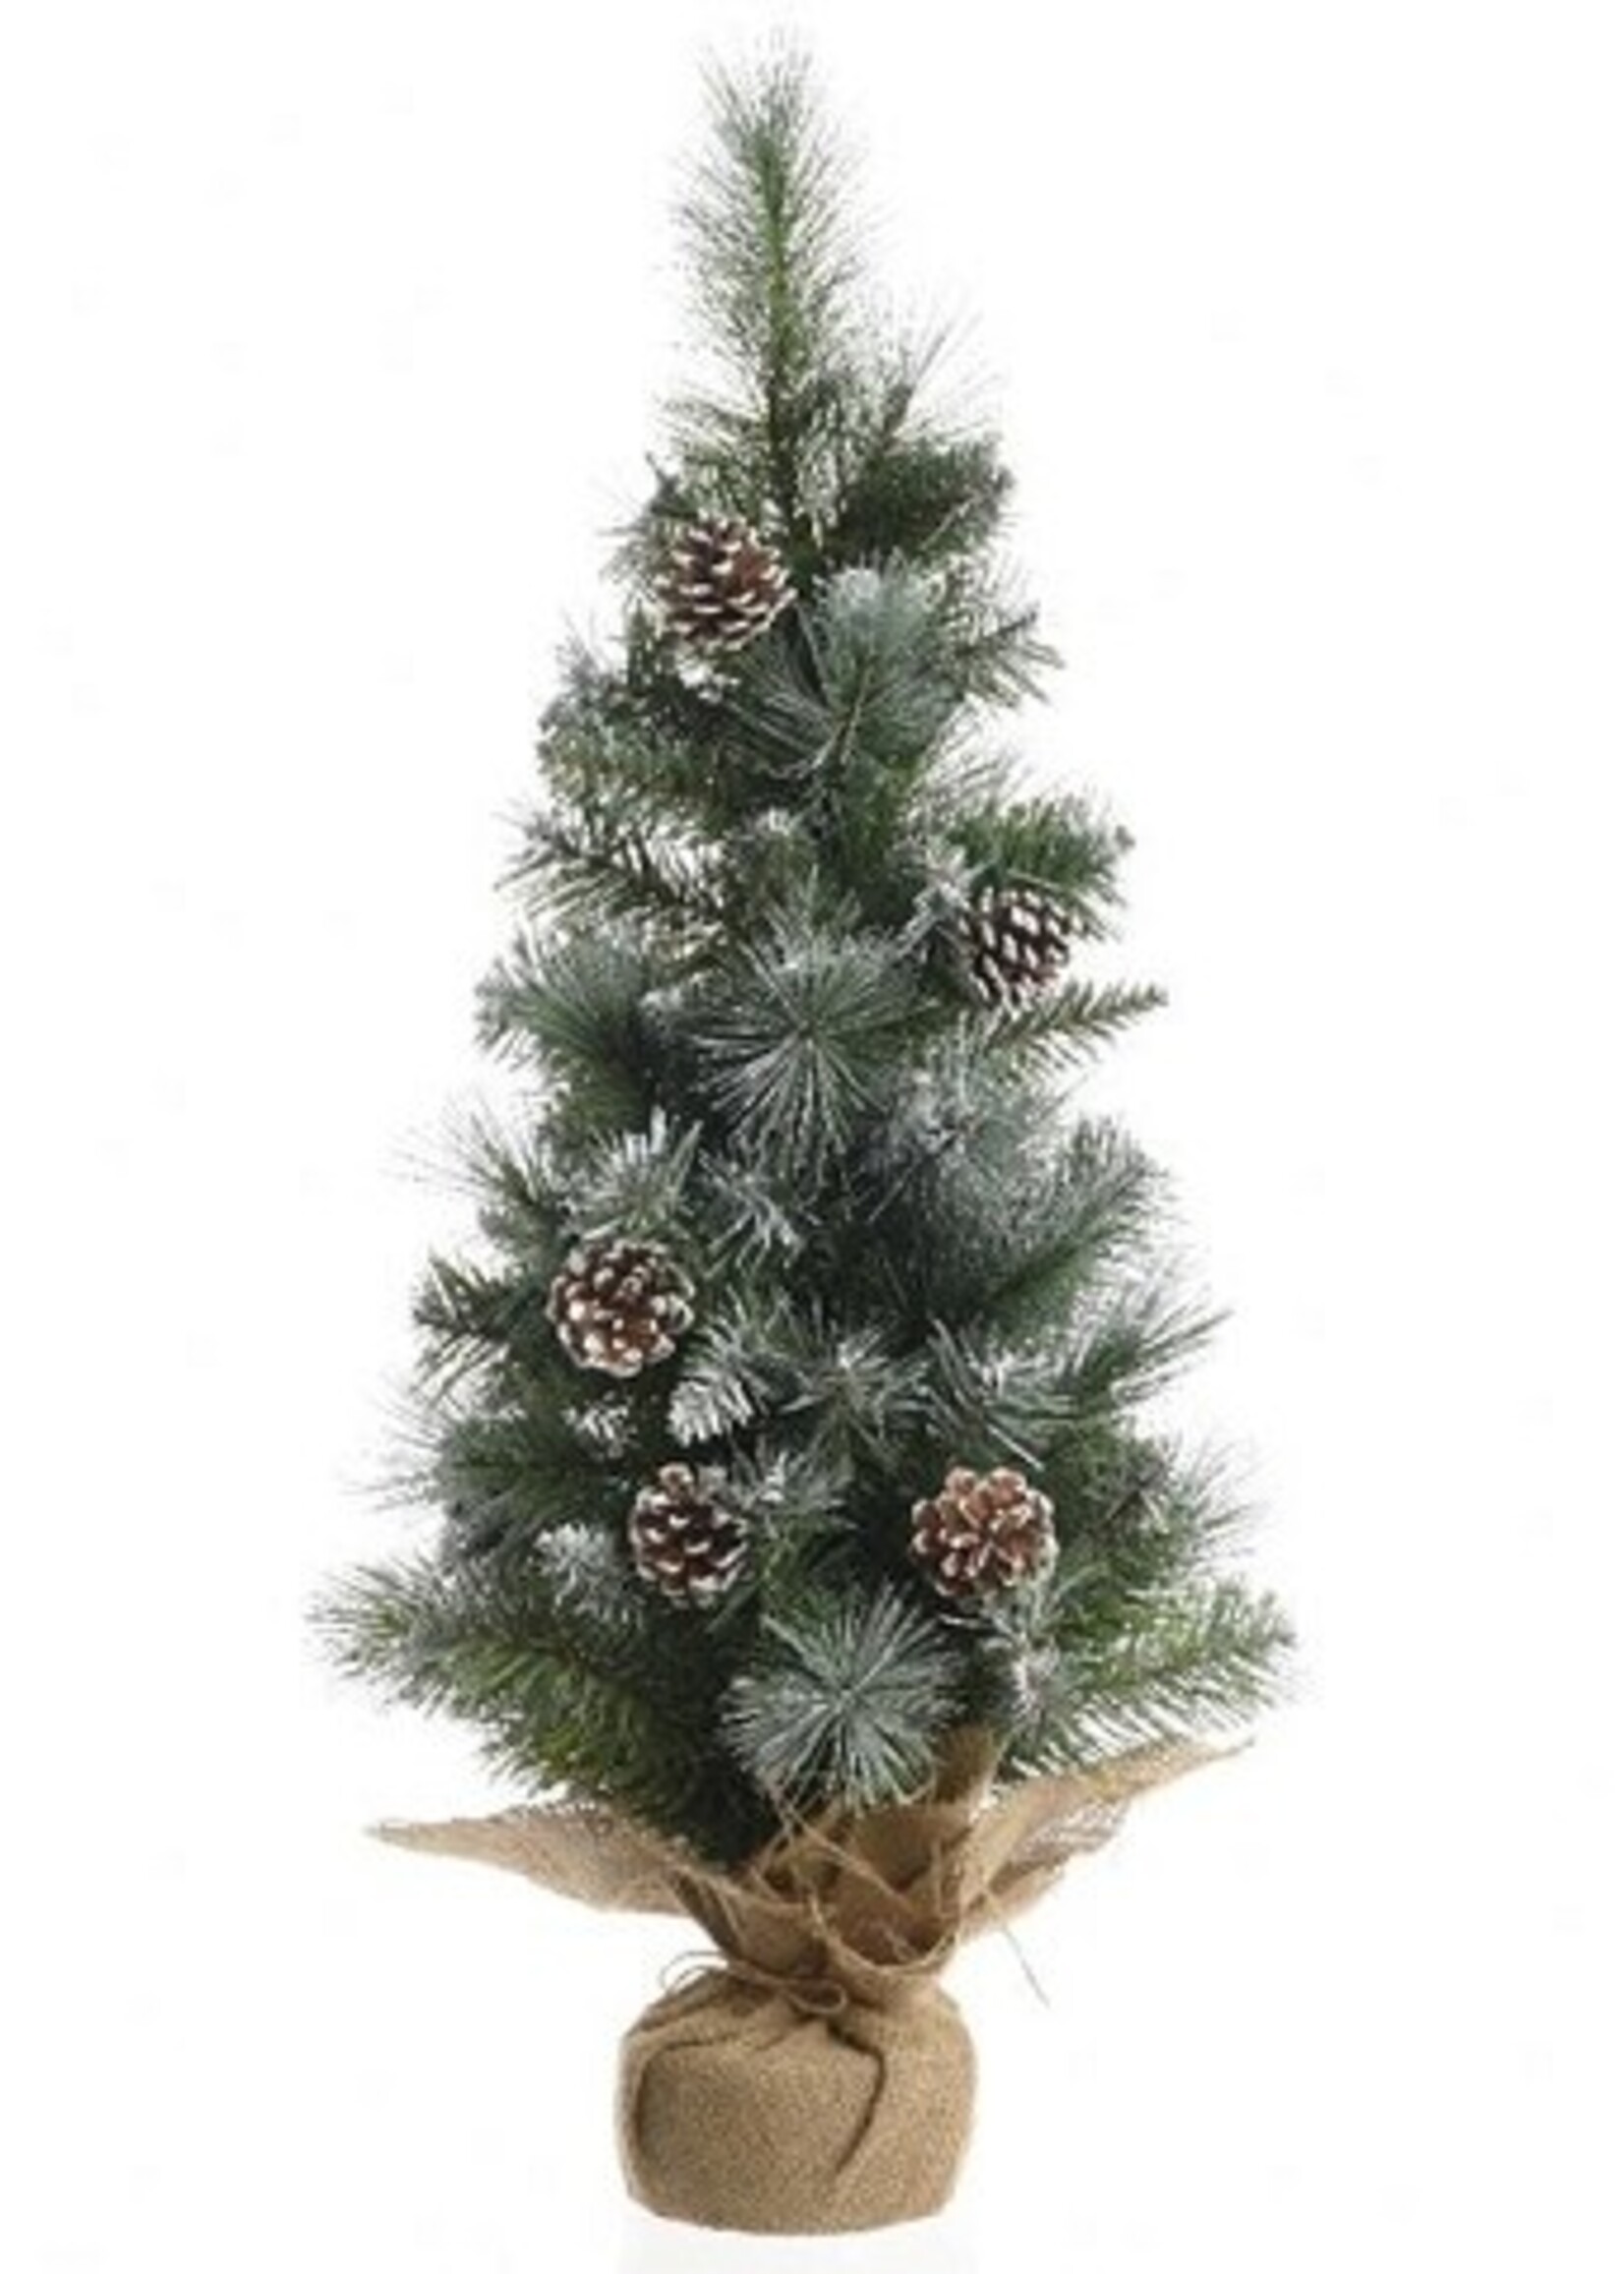 Everlands Imperial pine mini kunstkerstboom 60cm met dennenappels en frosted look